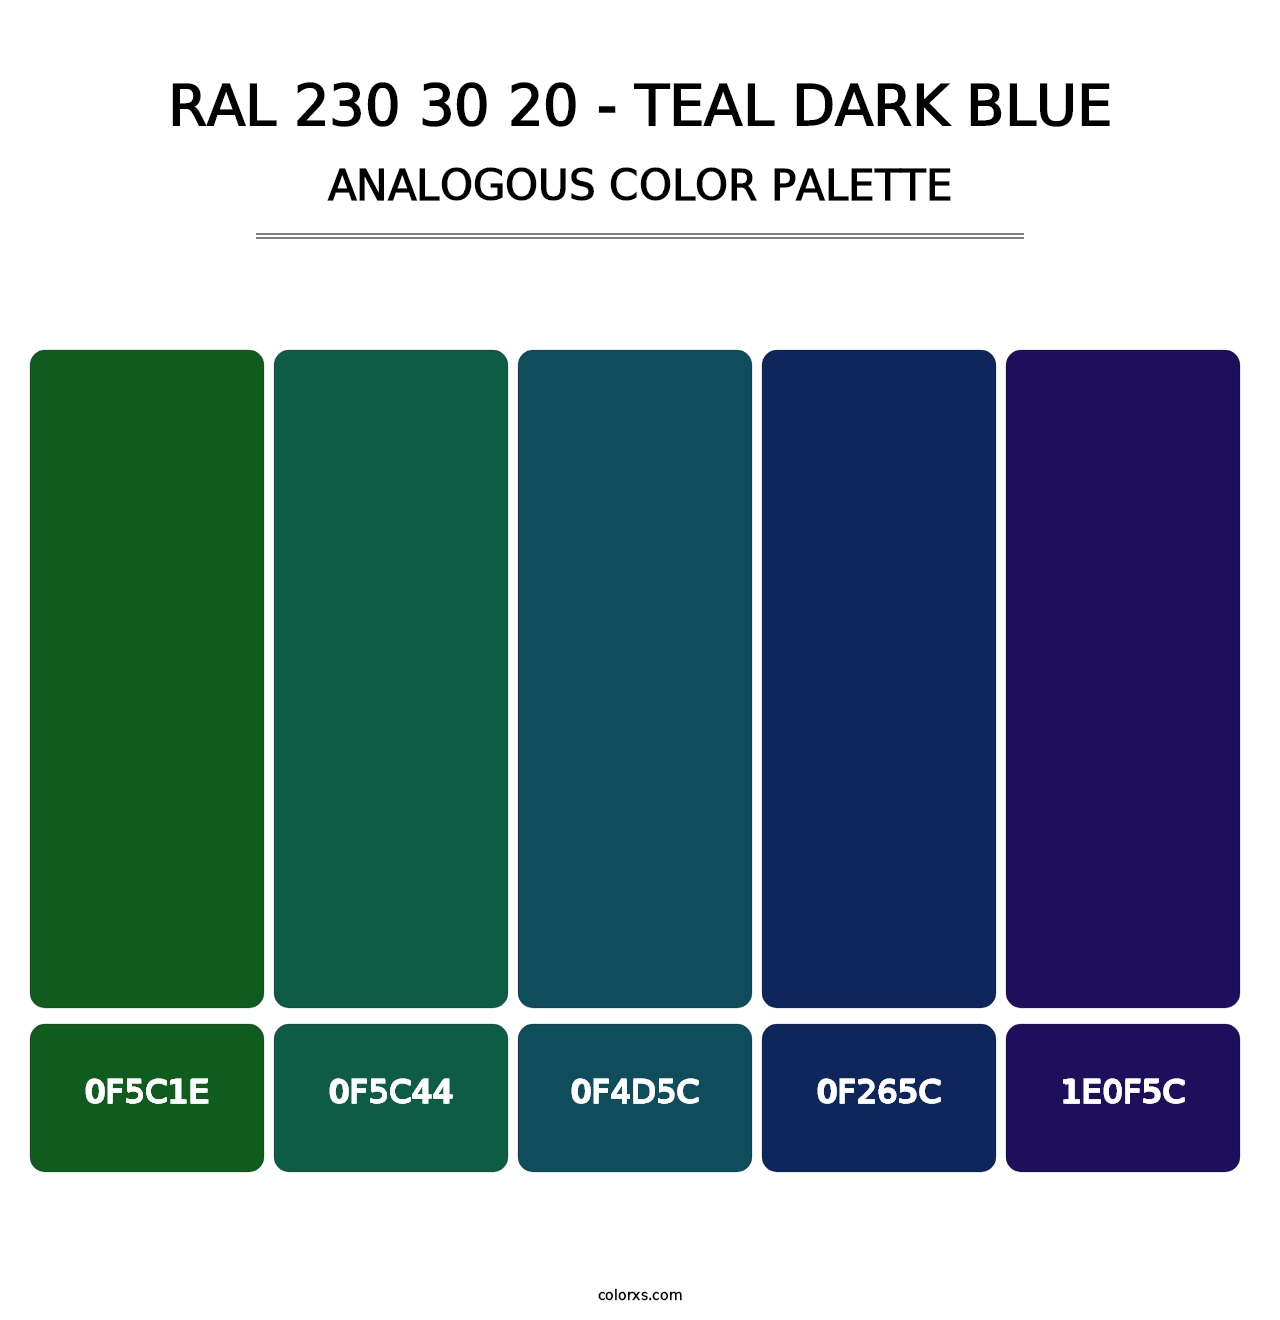 RAL 230 30 20 - Teal Dark Blue - Analogous Color Palette